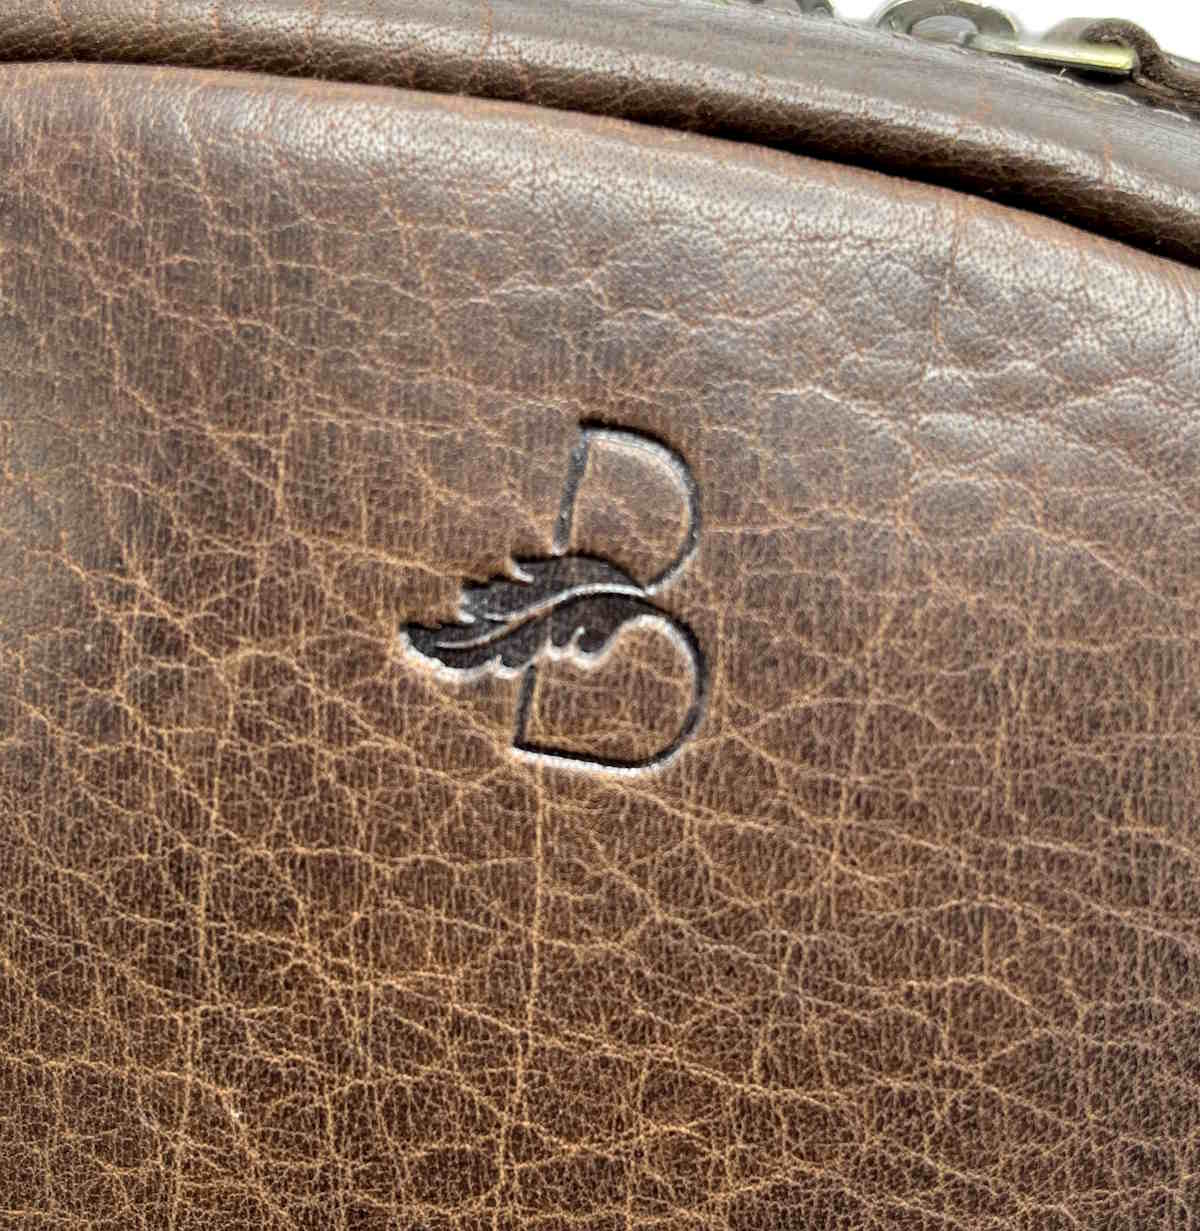 Genuine Leather backpack, Brand Basile,  art. BA3666TI